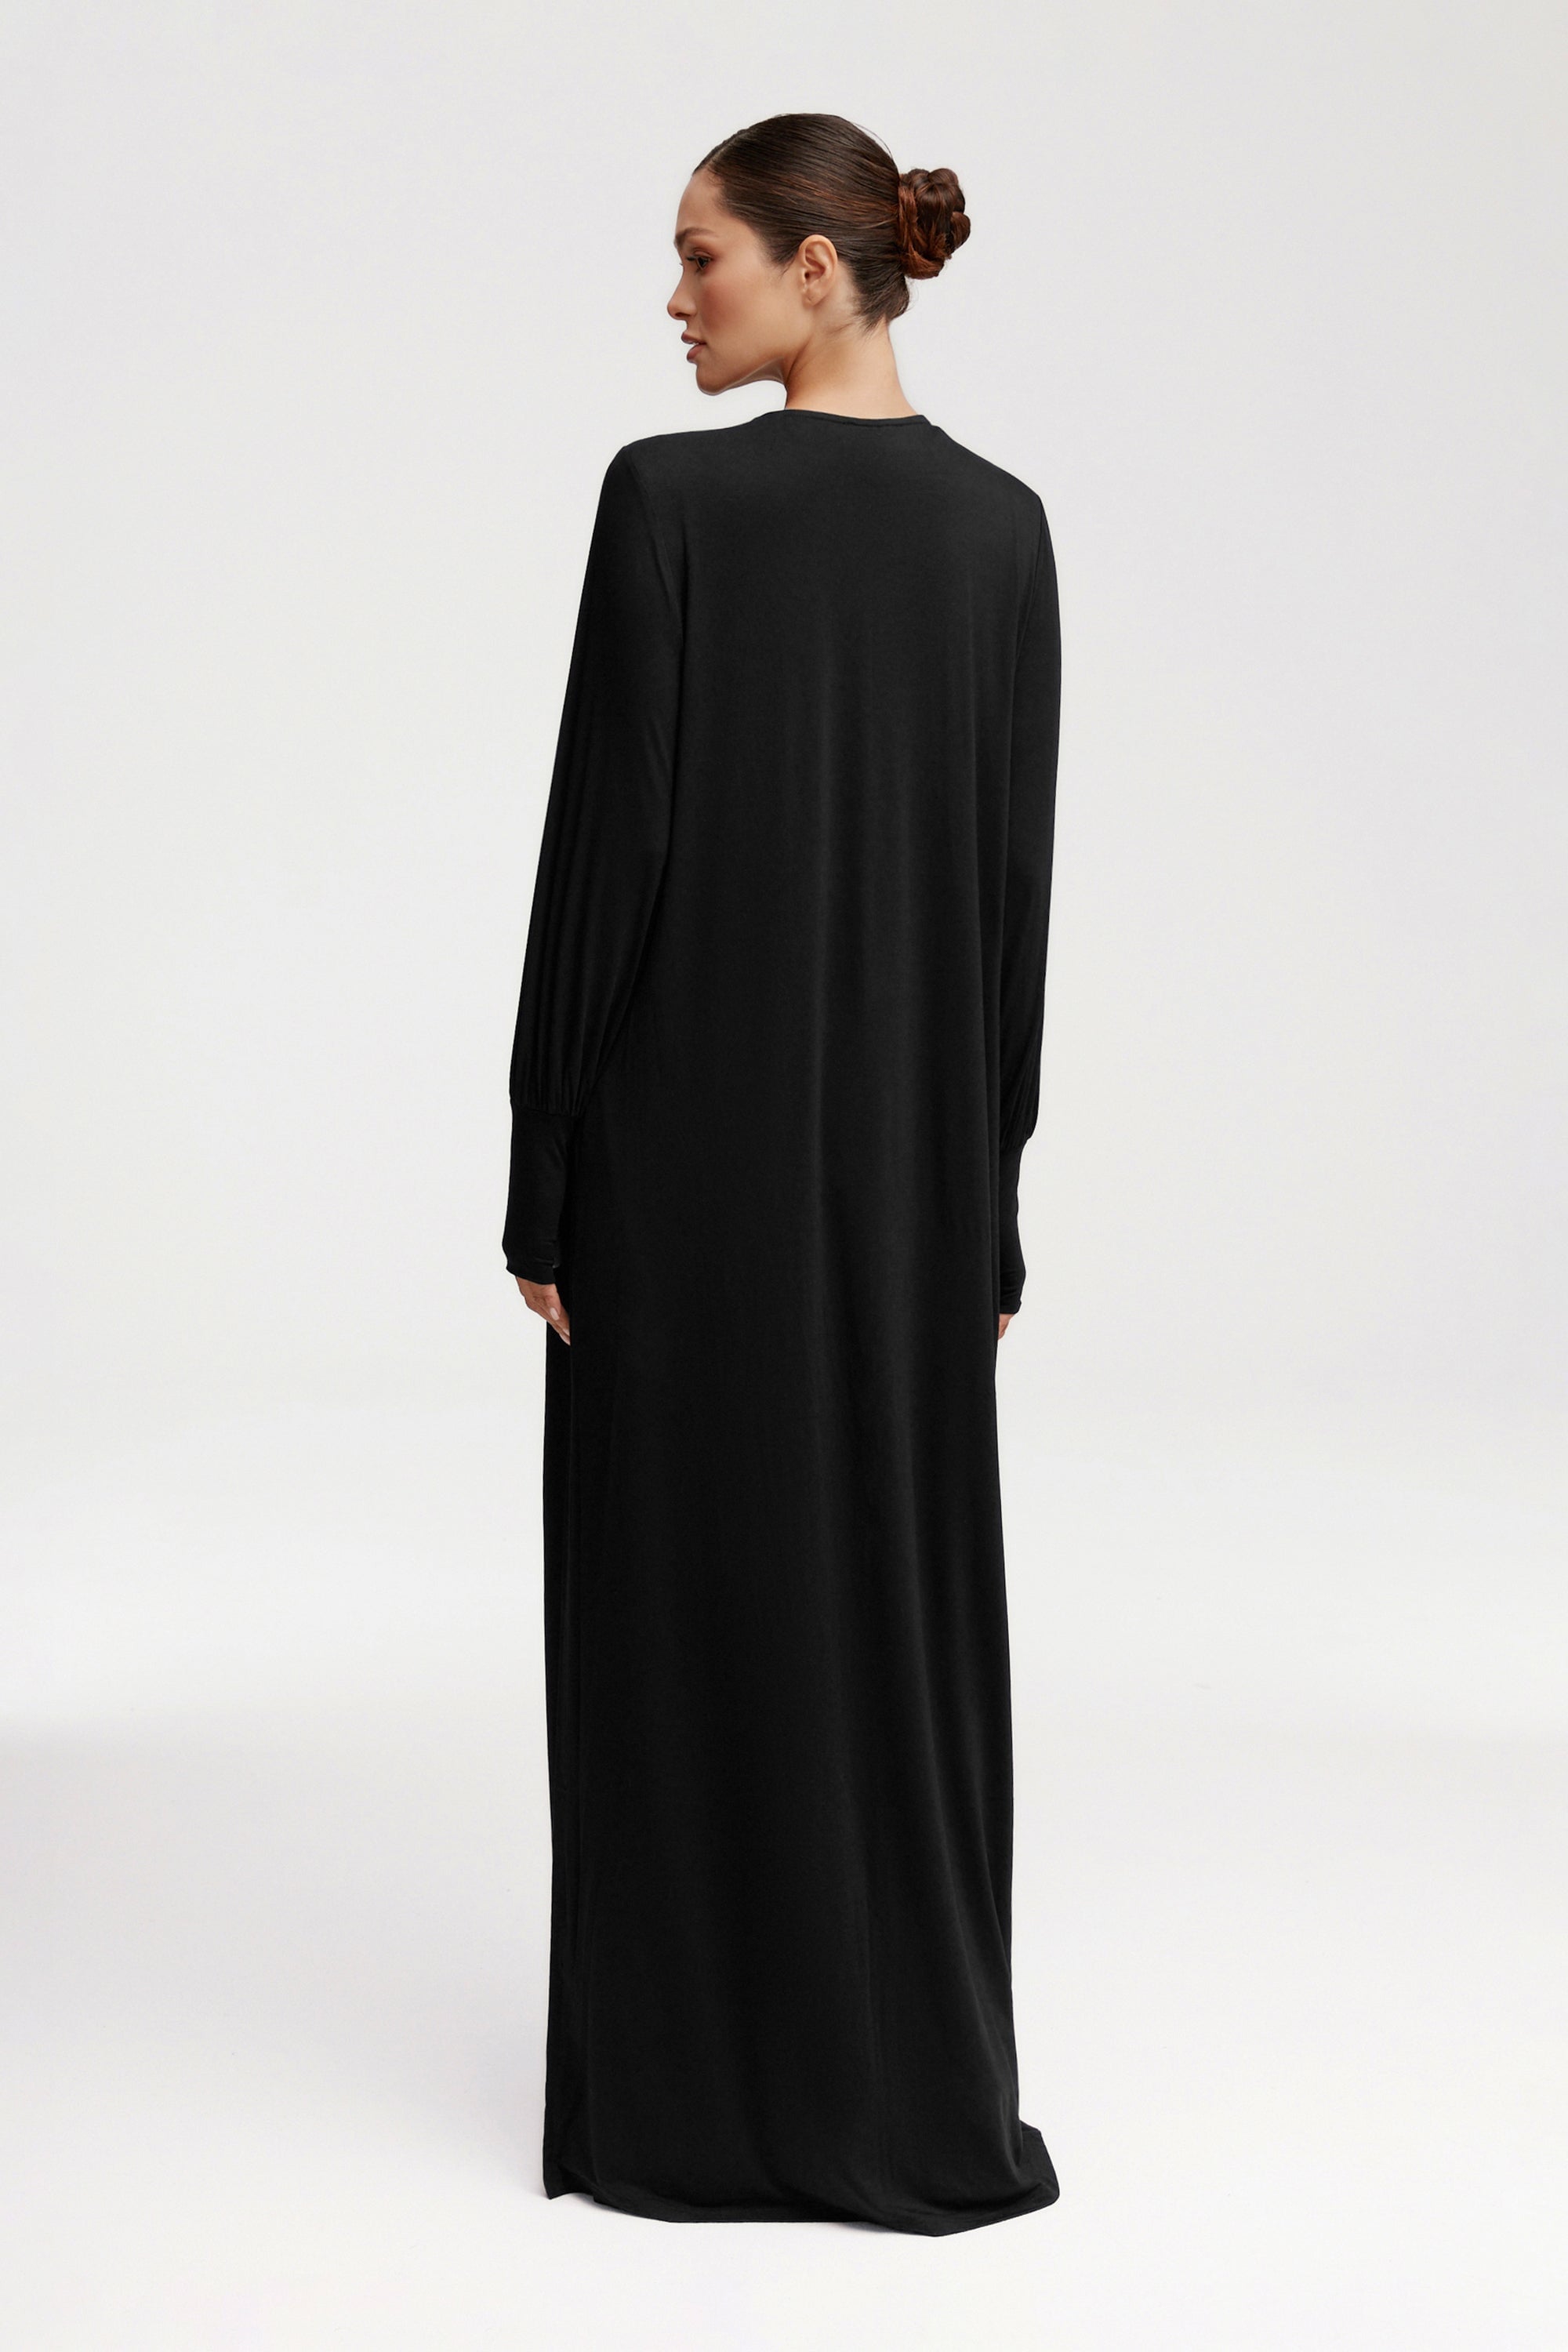 Jenin Jersey Open Abaya & Maxi Dress Set - Black Clothing Veiled 